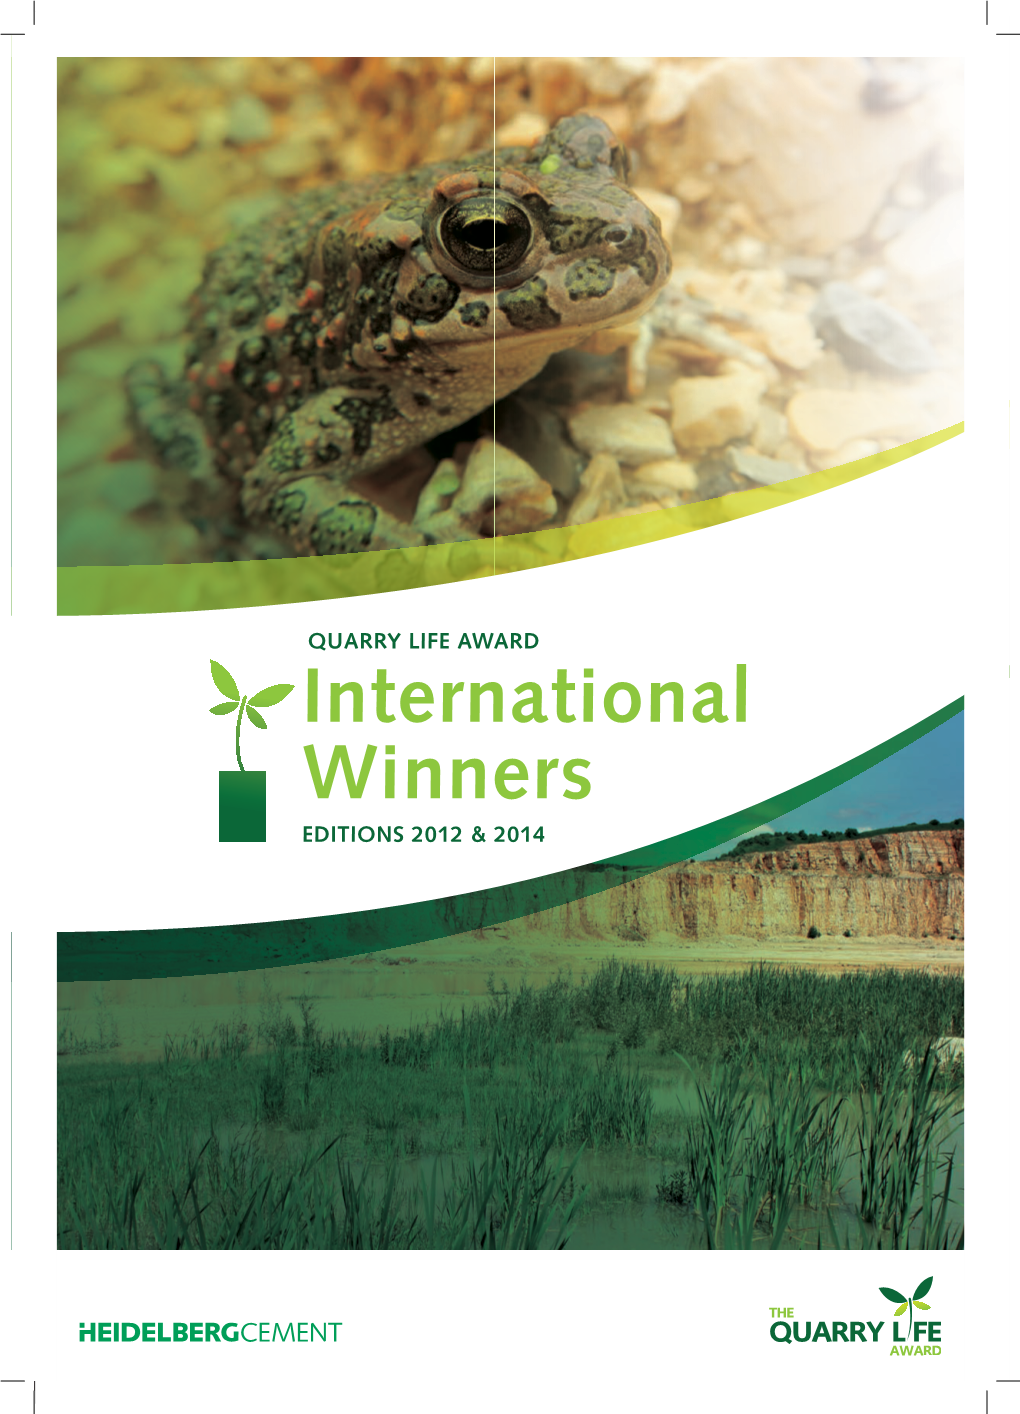 International Winners Editions 2012 & 2014 Quarry Life Award at a Glance